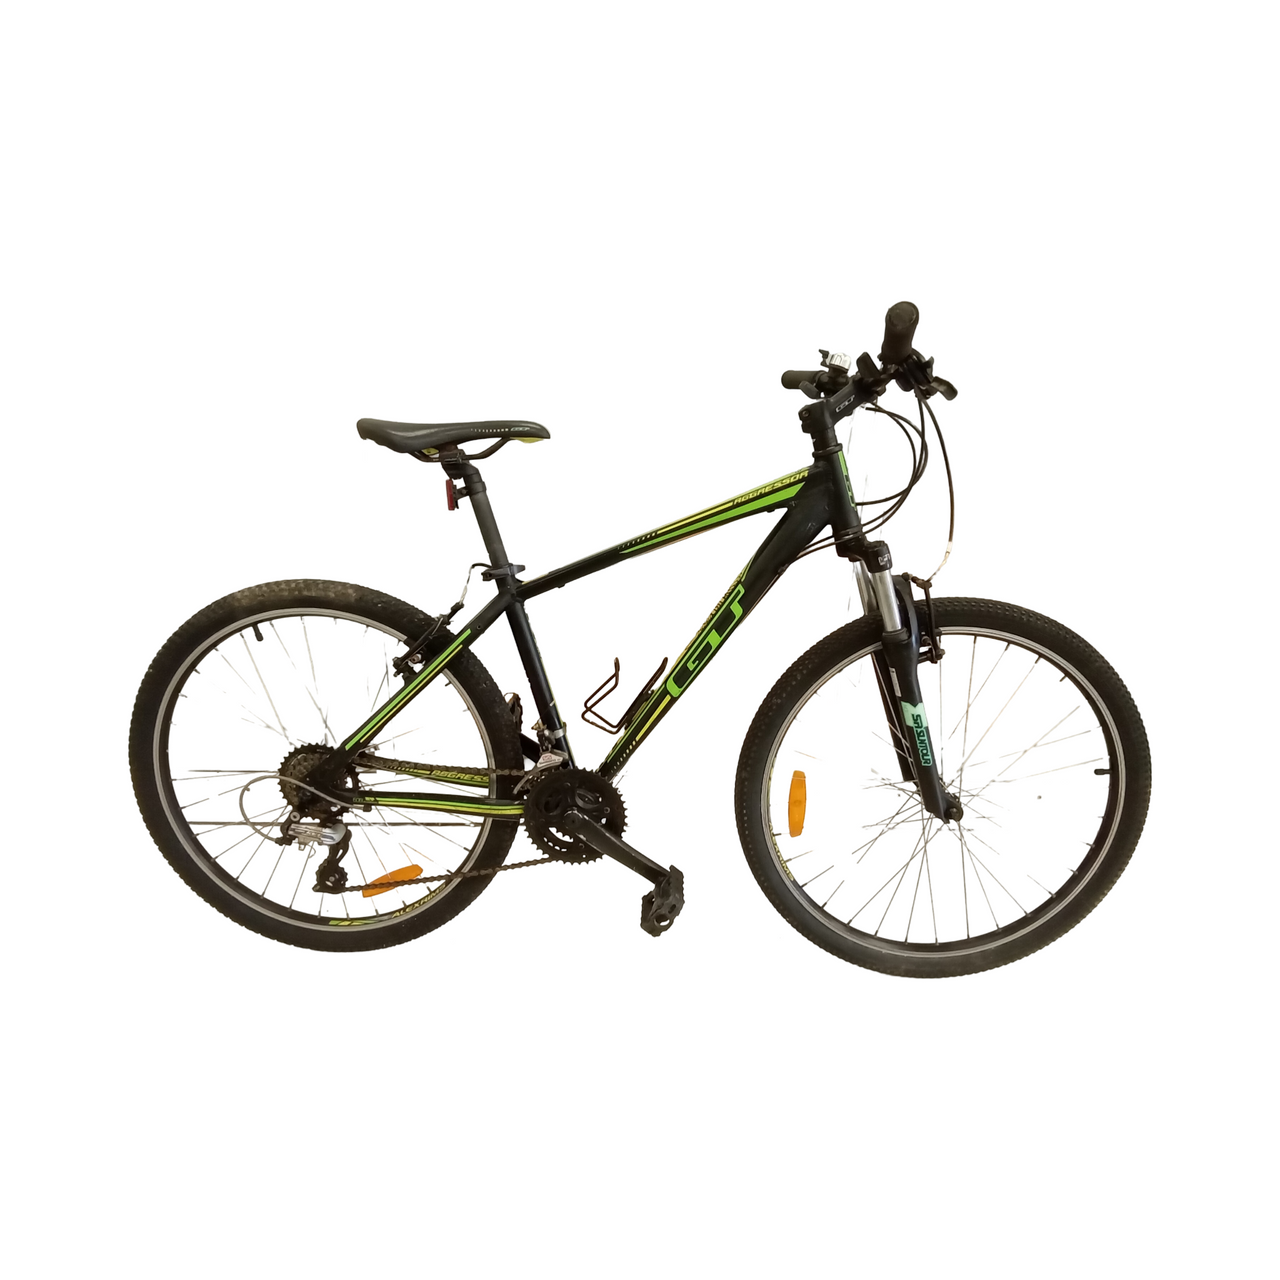 1793 - 42cm Black,
Green, Mountain Bike, Bike